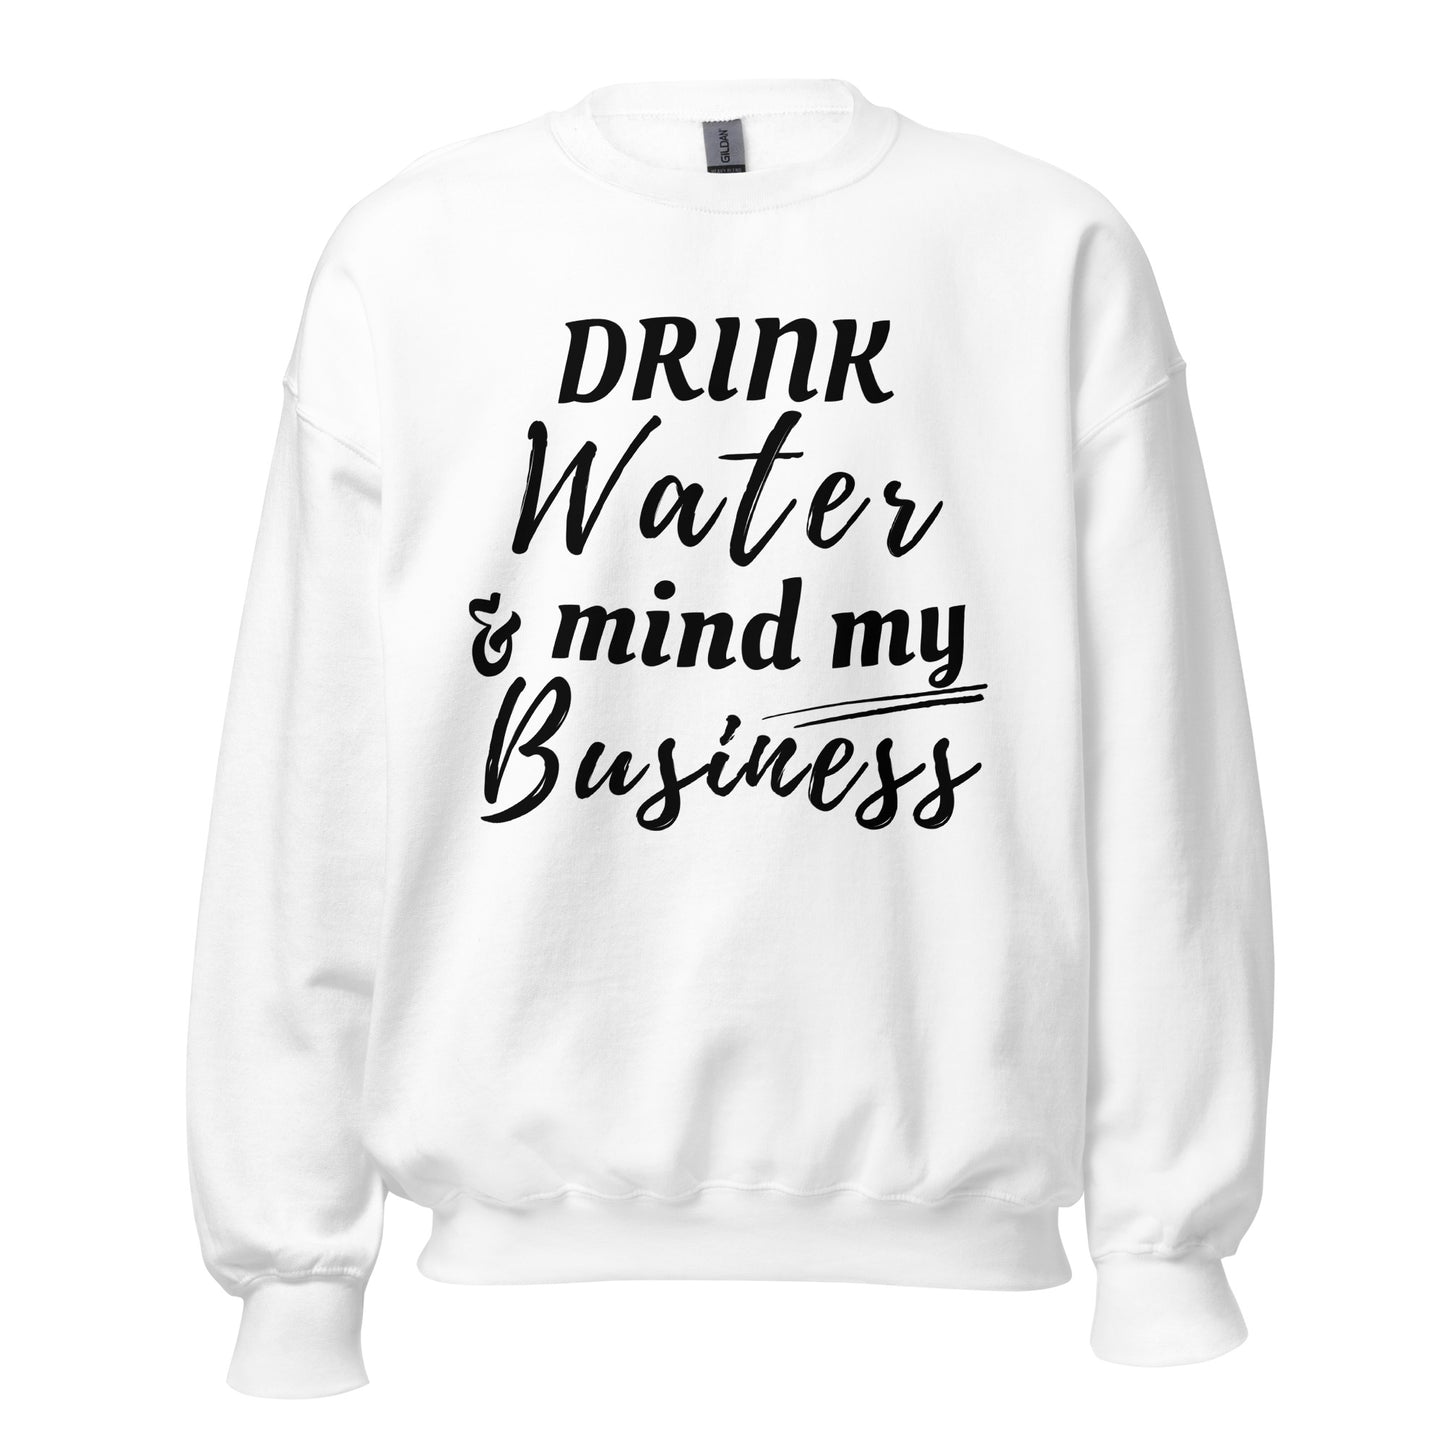 "Drink Water and Mind my Buisness" Unisex Sweatshirt